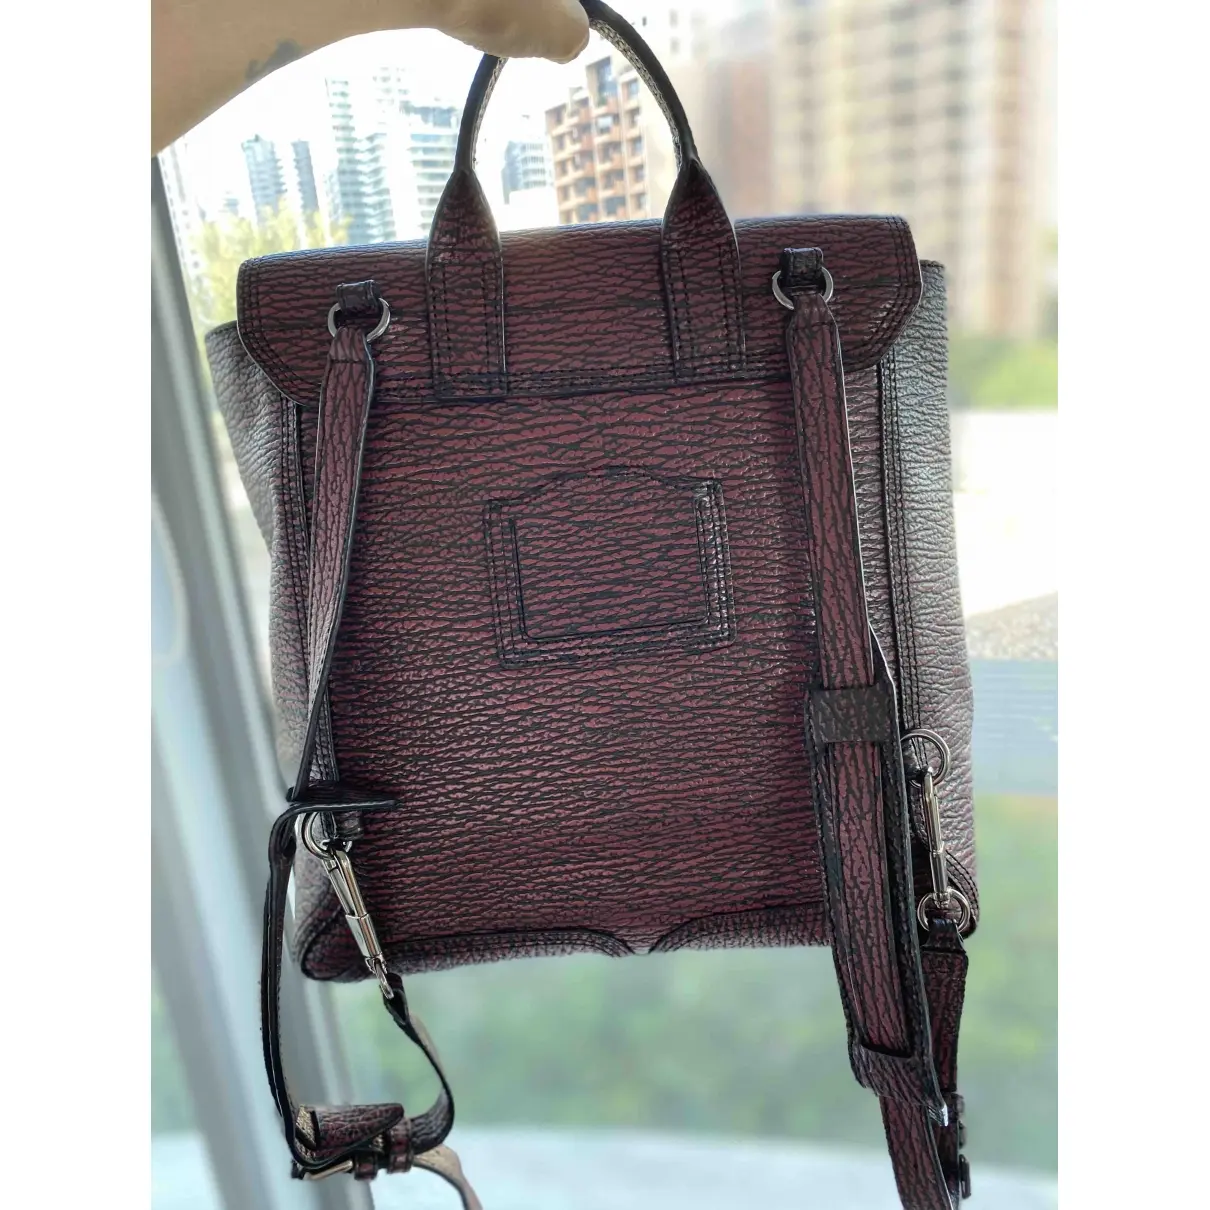 Buy 3.1 Phillip Lim Pashli leather backpack online